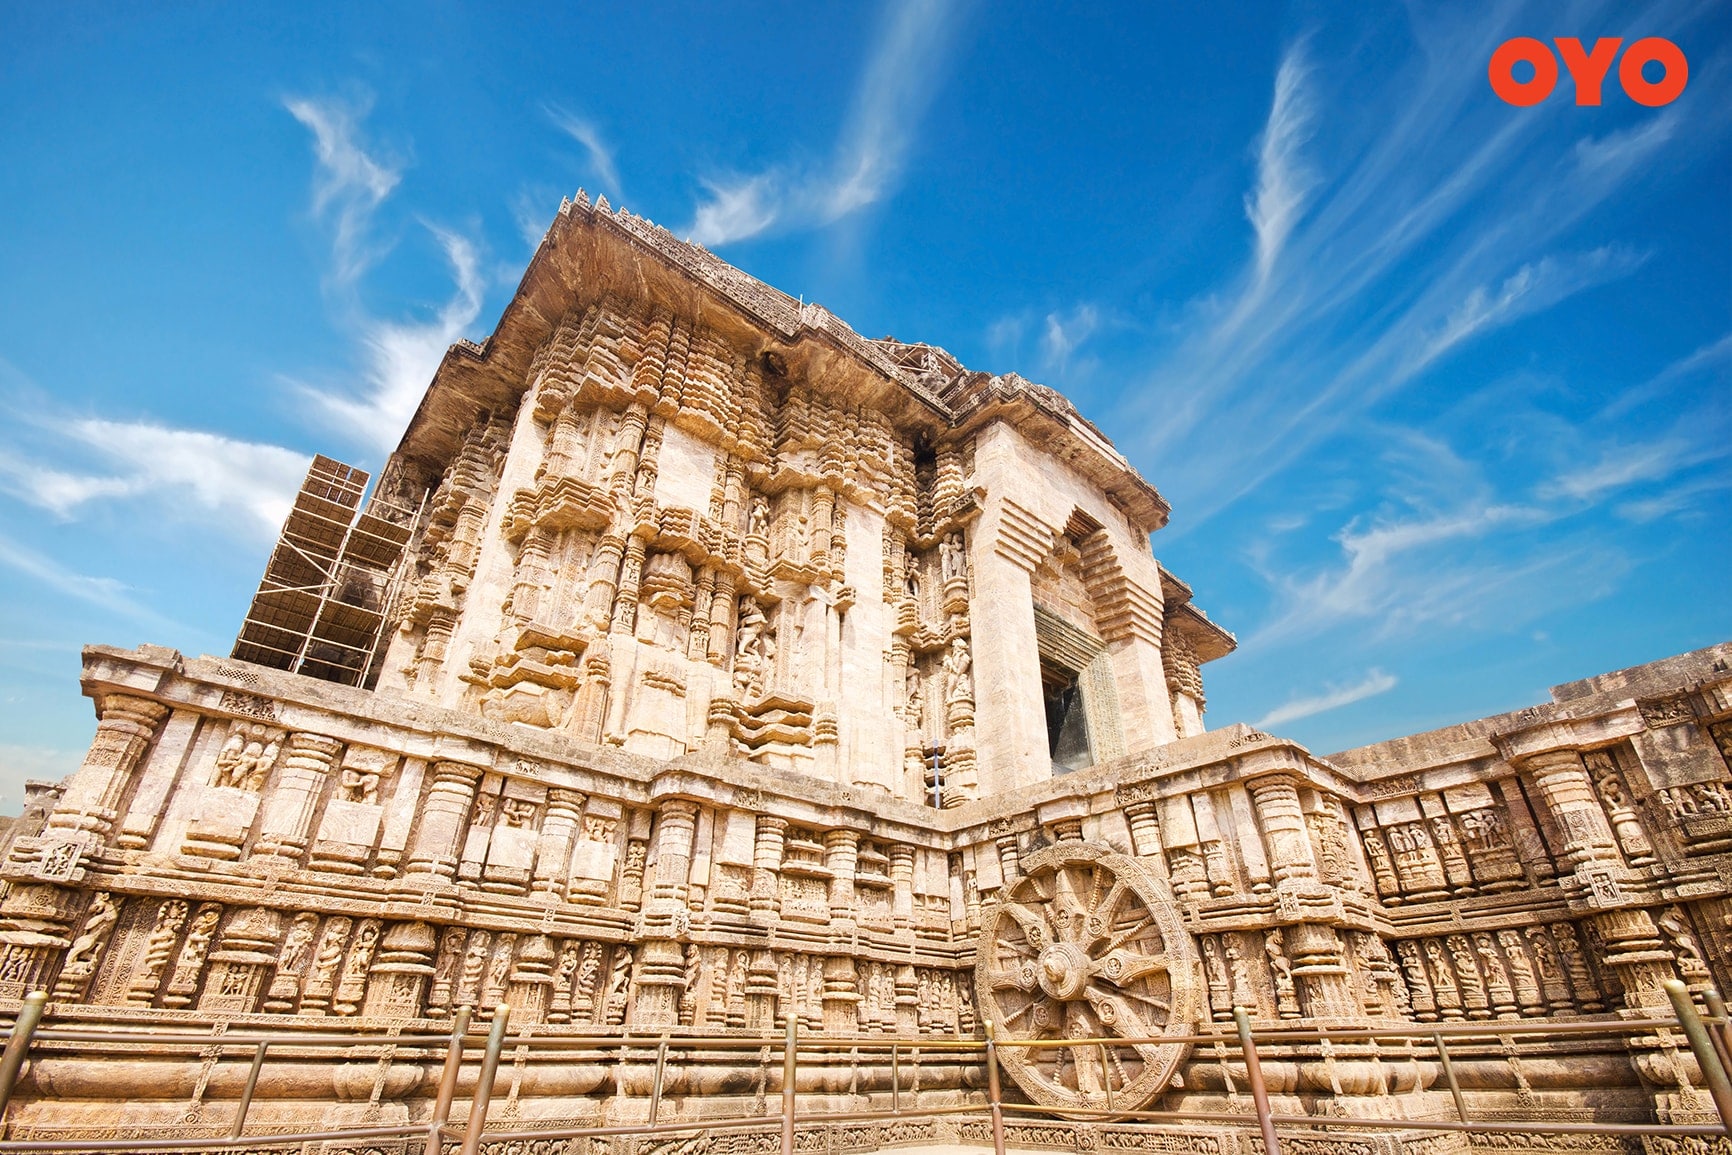 Konark Sun Temple,Orissa - One of the most famous temple of India